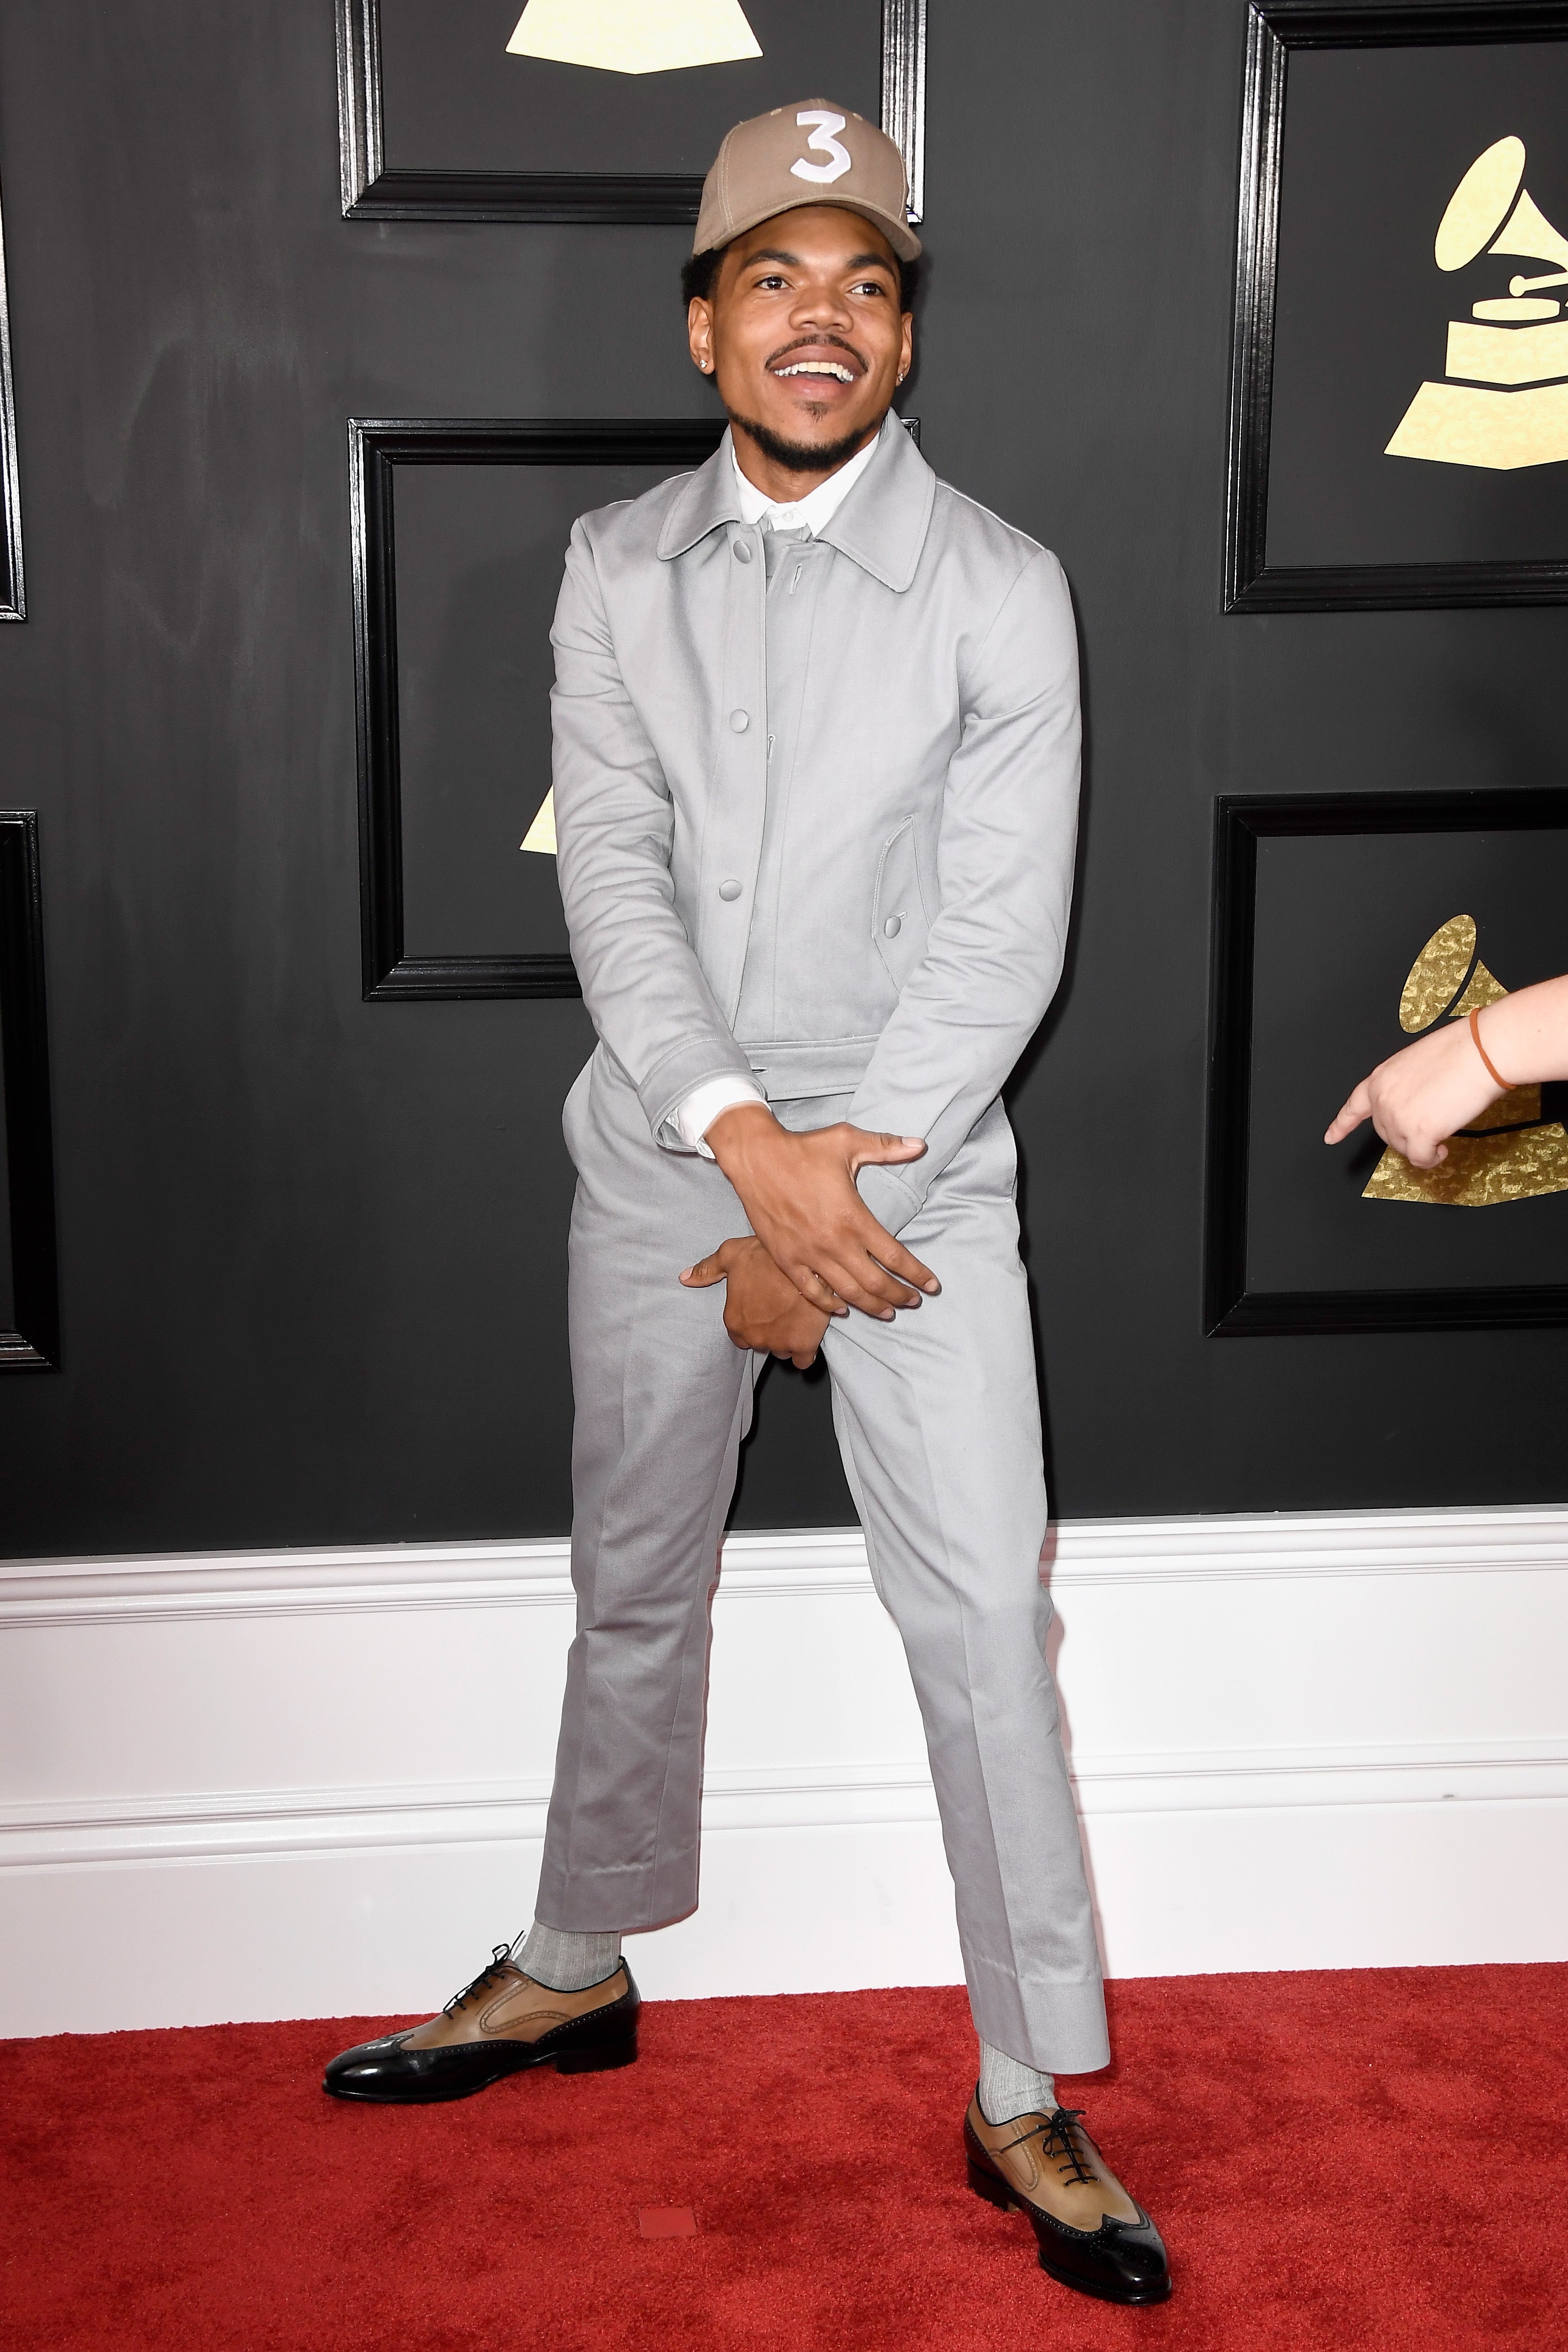 Chance The Rapper Makes Grammy History, Earns ‘Best New Artist’ Award